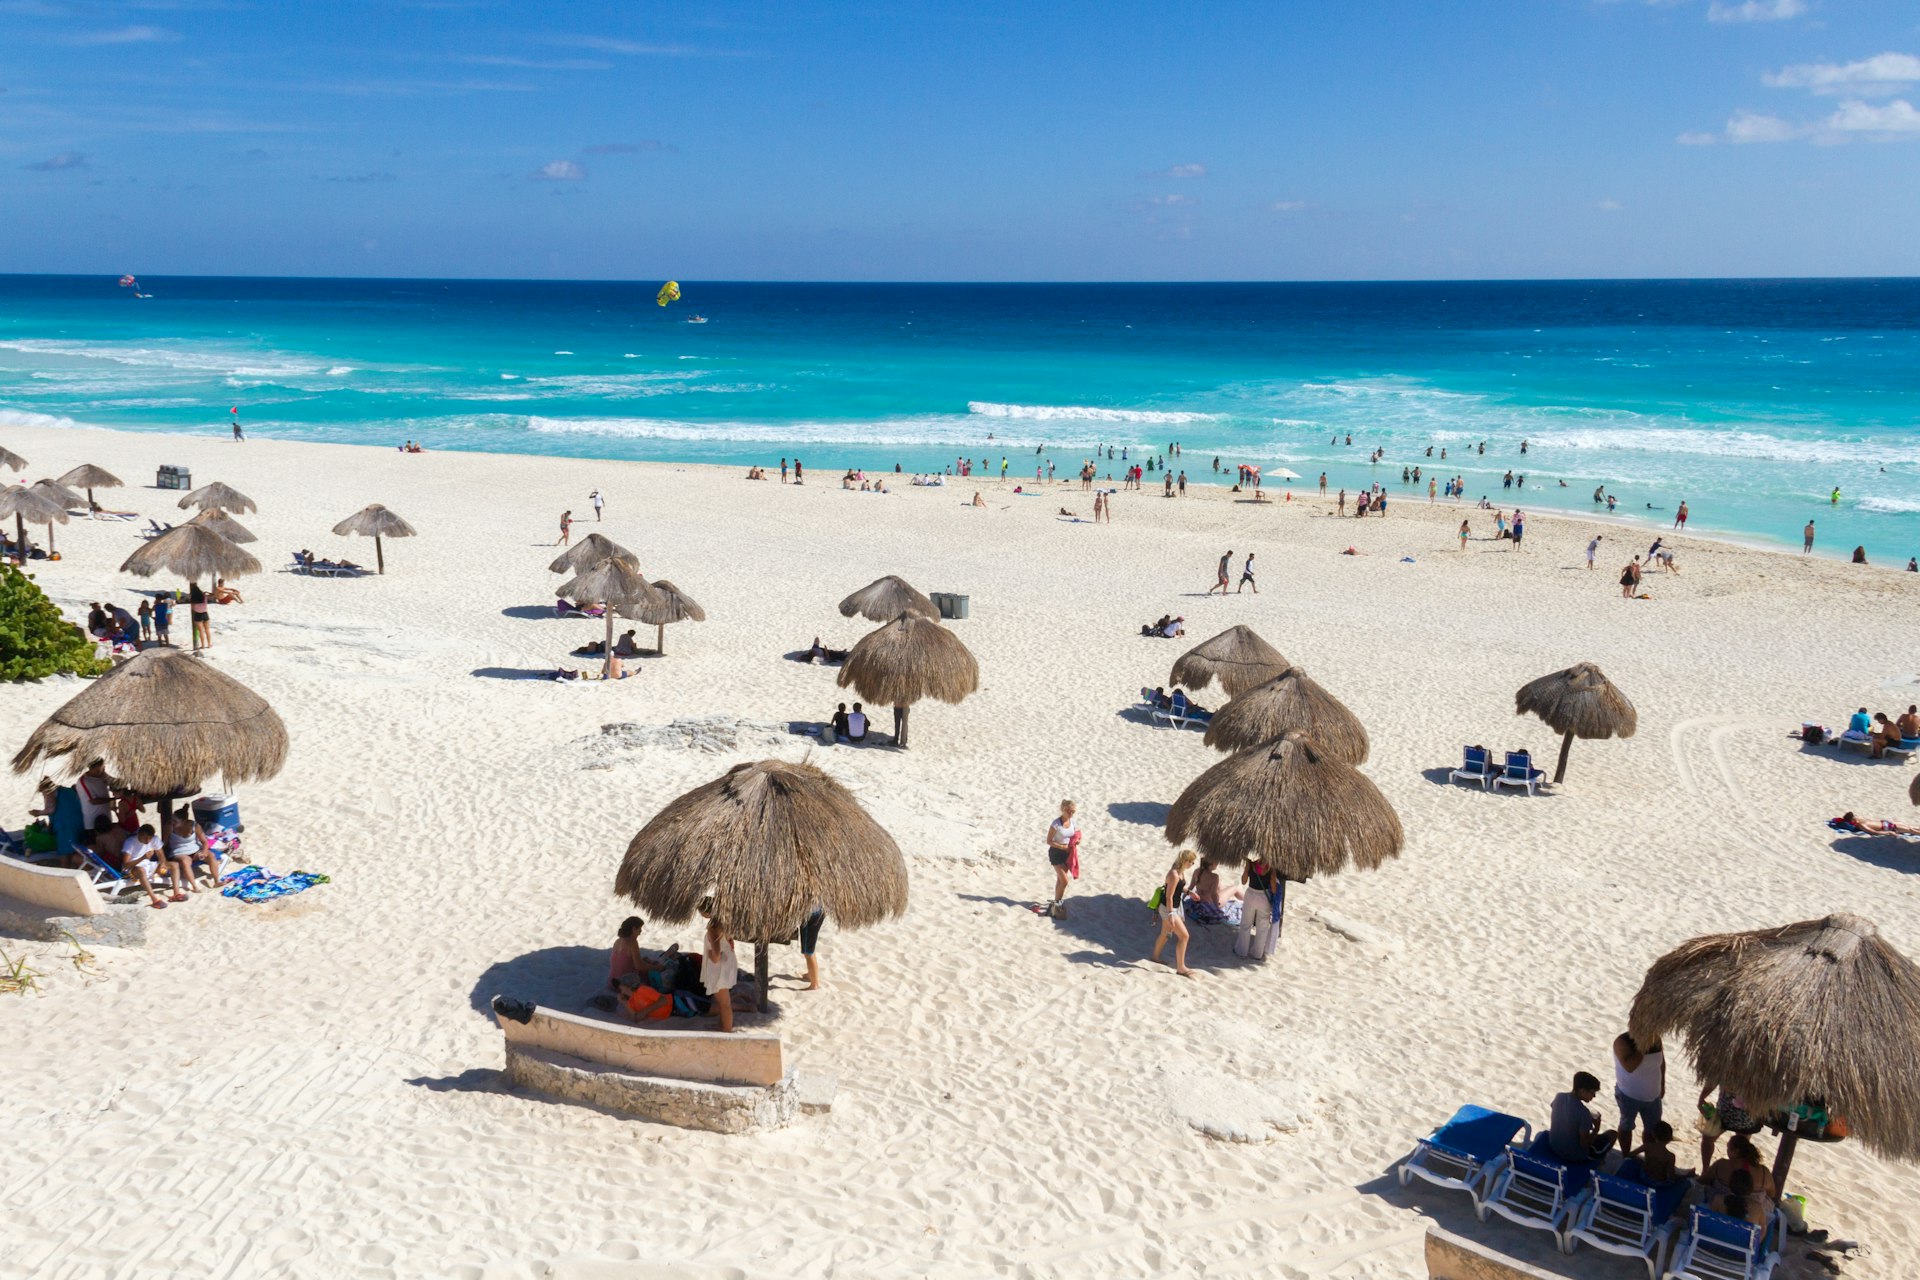 Palapas (beach umbrellas) on Playa Defines, Cancún, Quintana Roo, Mexico